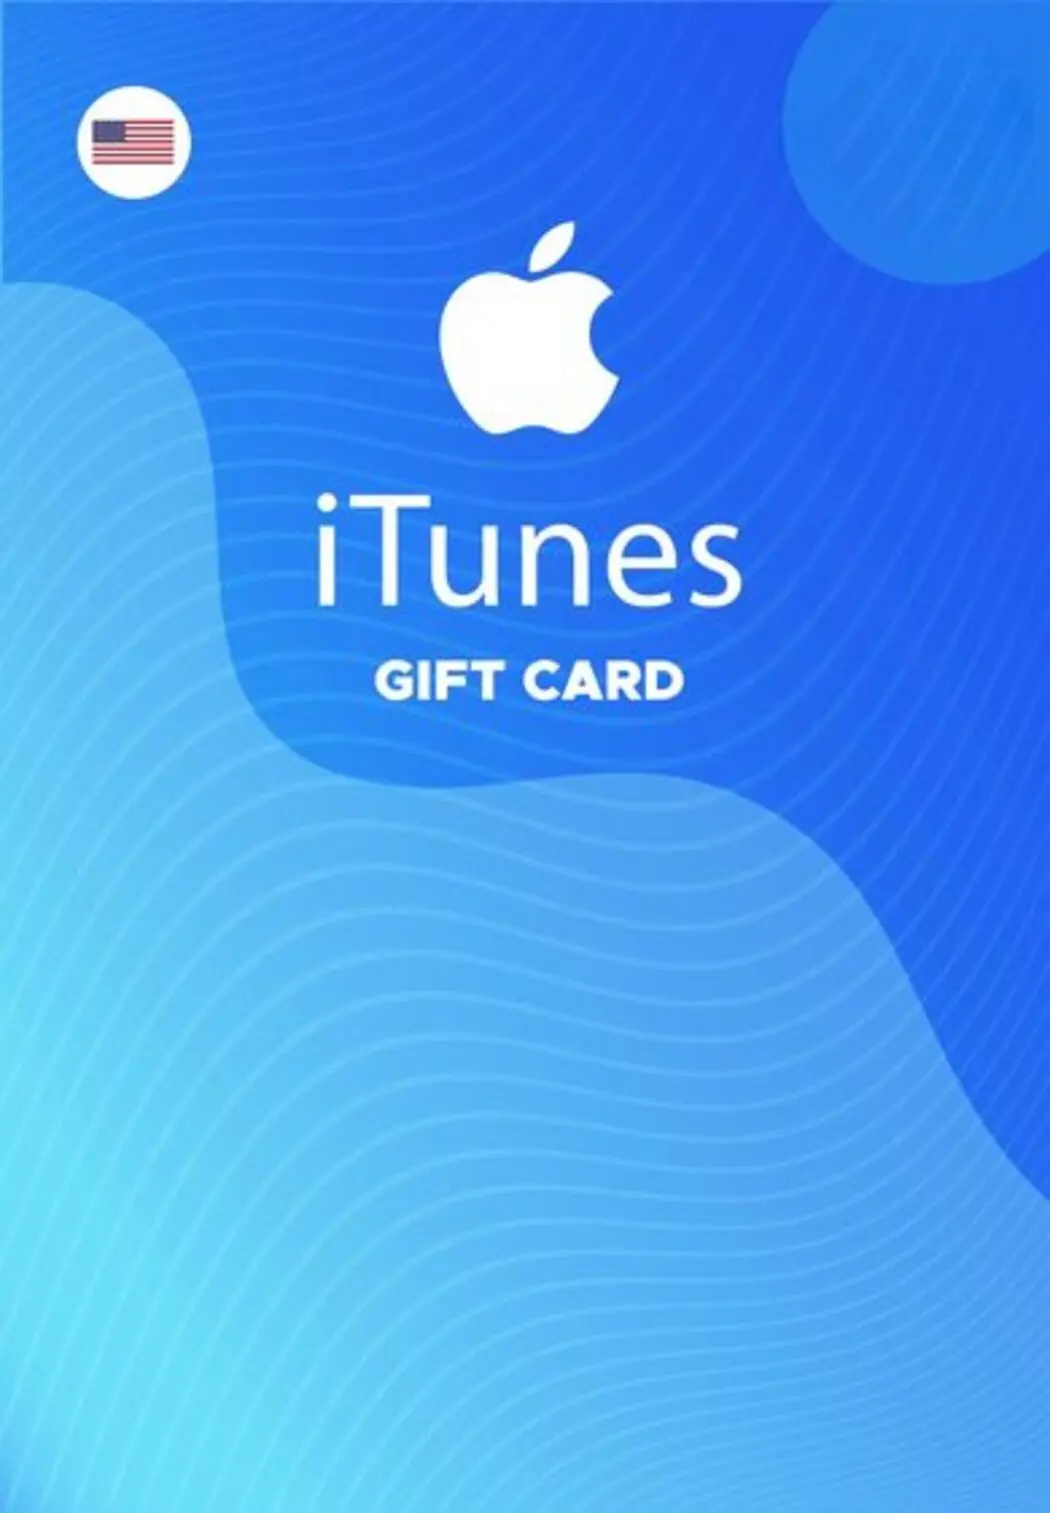 iTunes $3 Gift Card (US) - Digital Code